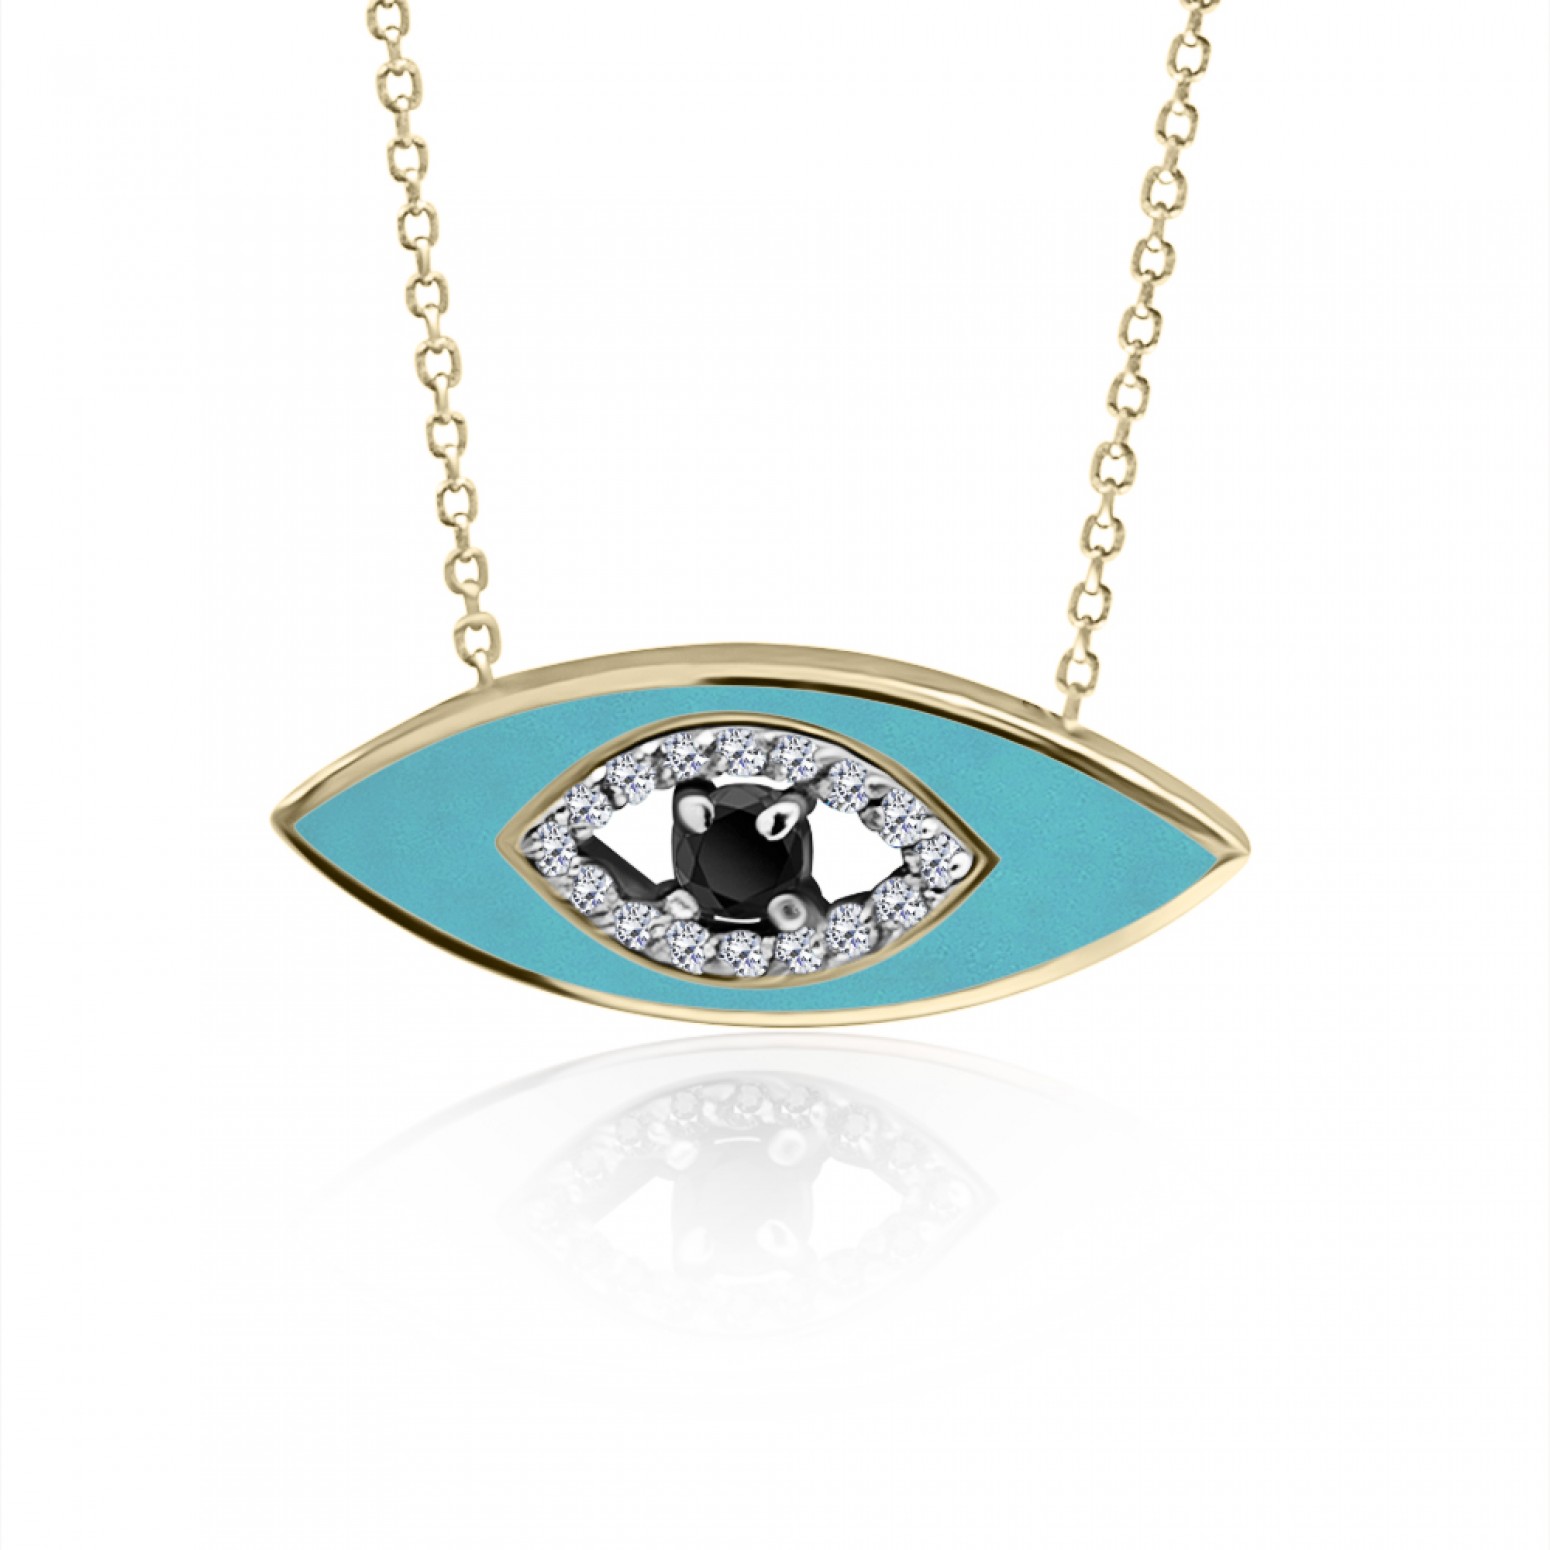 Eye necklace, Κ9 gold with white, black zircon and enamel, ko5024 NECKLACES Κοσμηματα - chrilia.gr